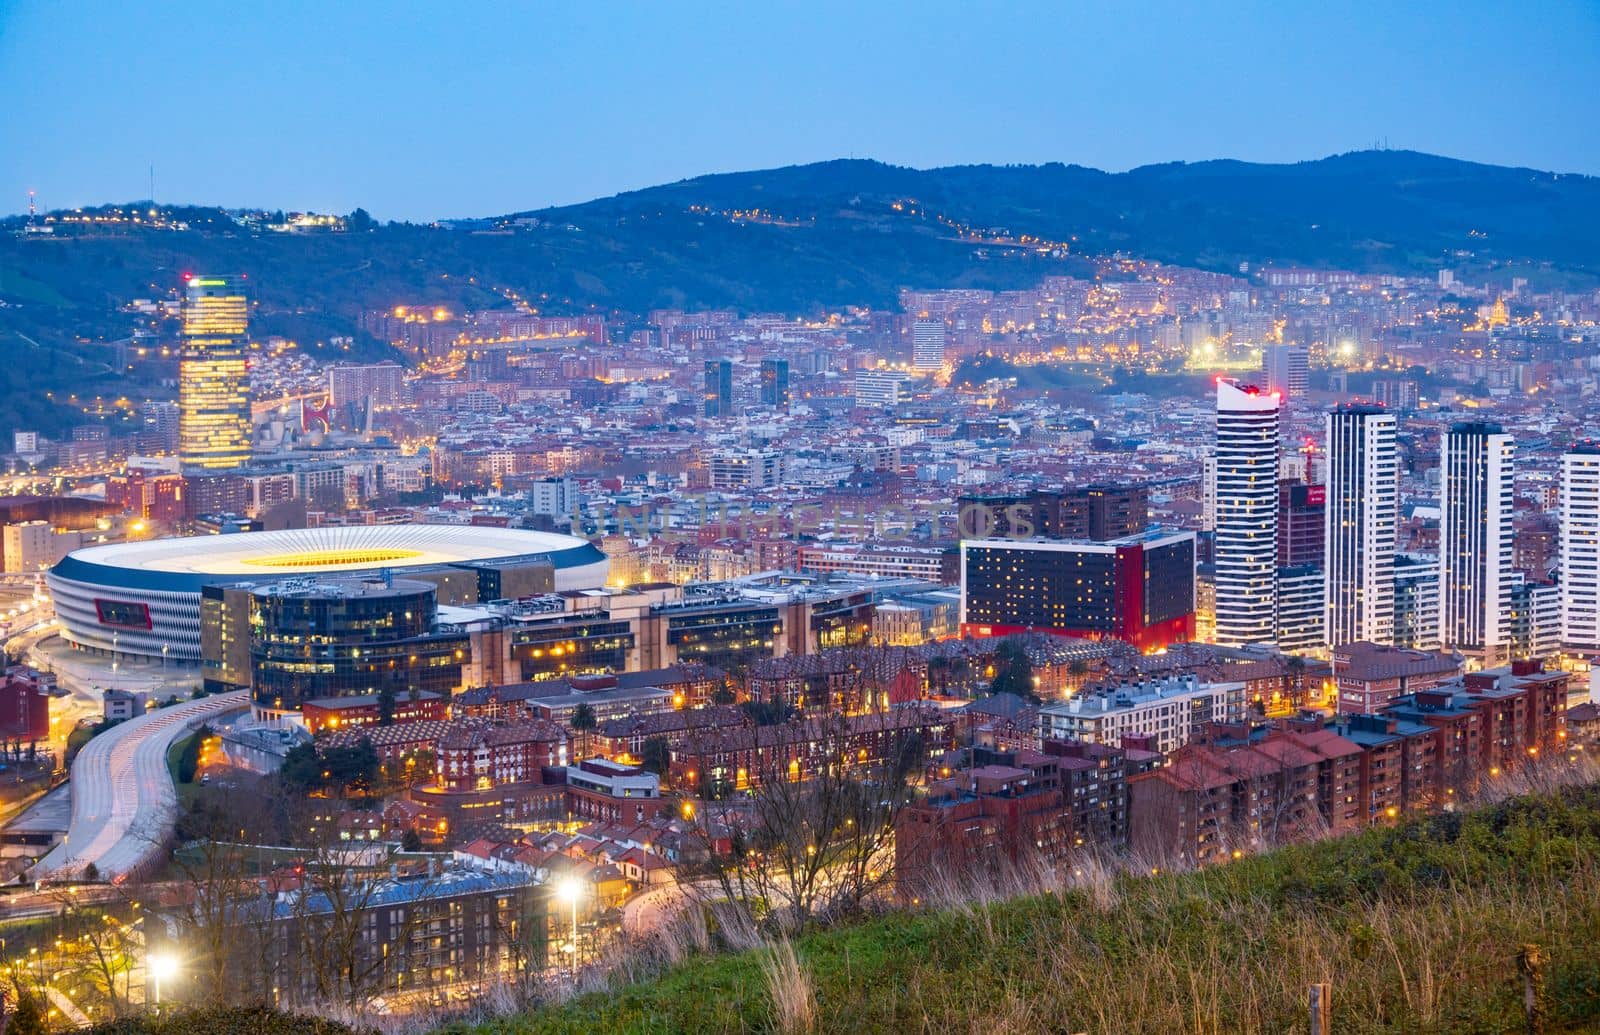 Nightfall in the great Bilbao city in Spain by Tilo